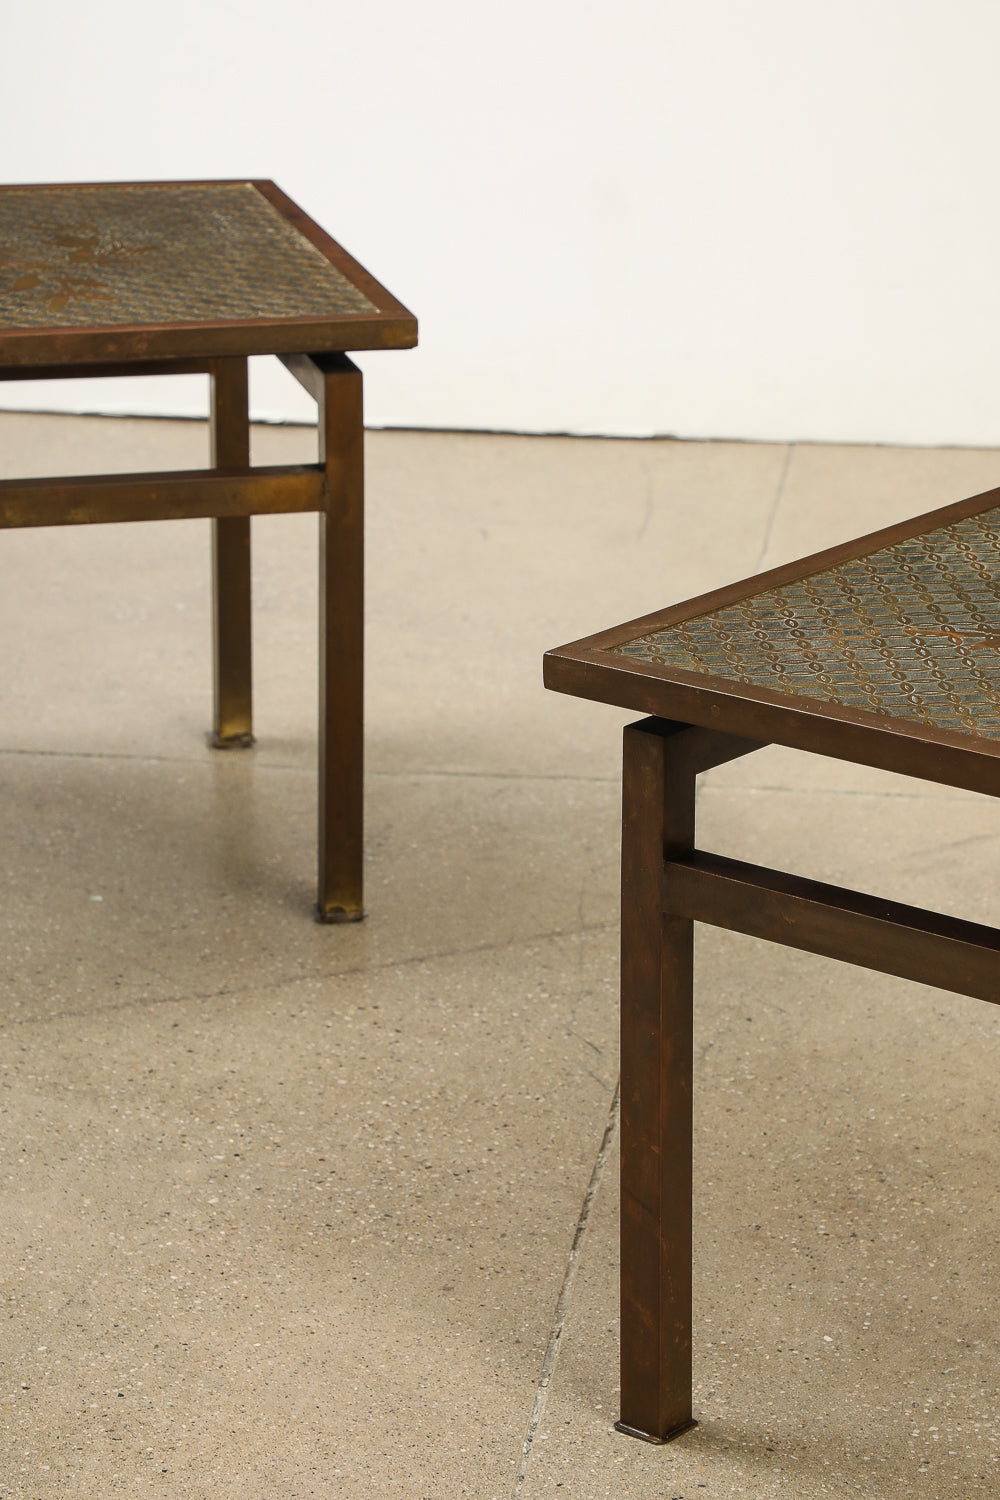 Pair of Kuan Su Side Tables by Philip & Kelvin LaVerne